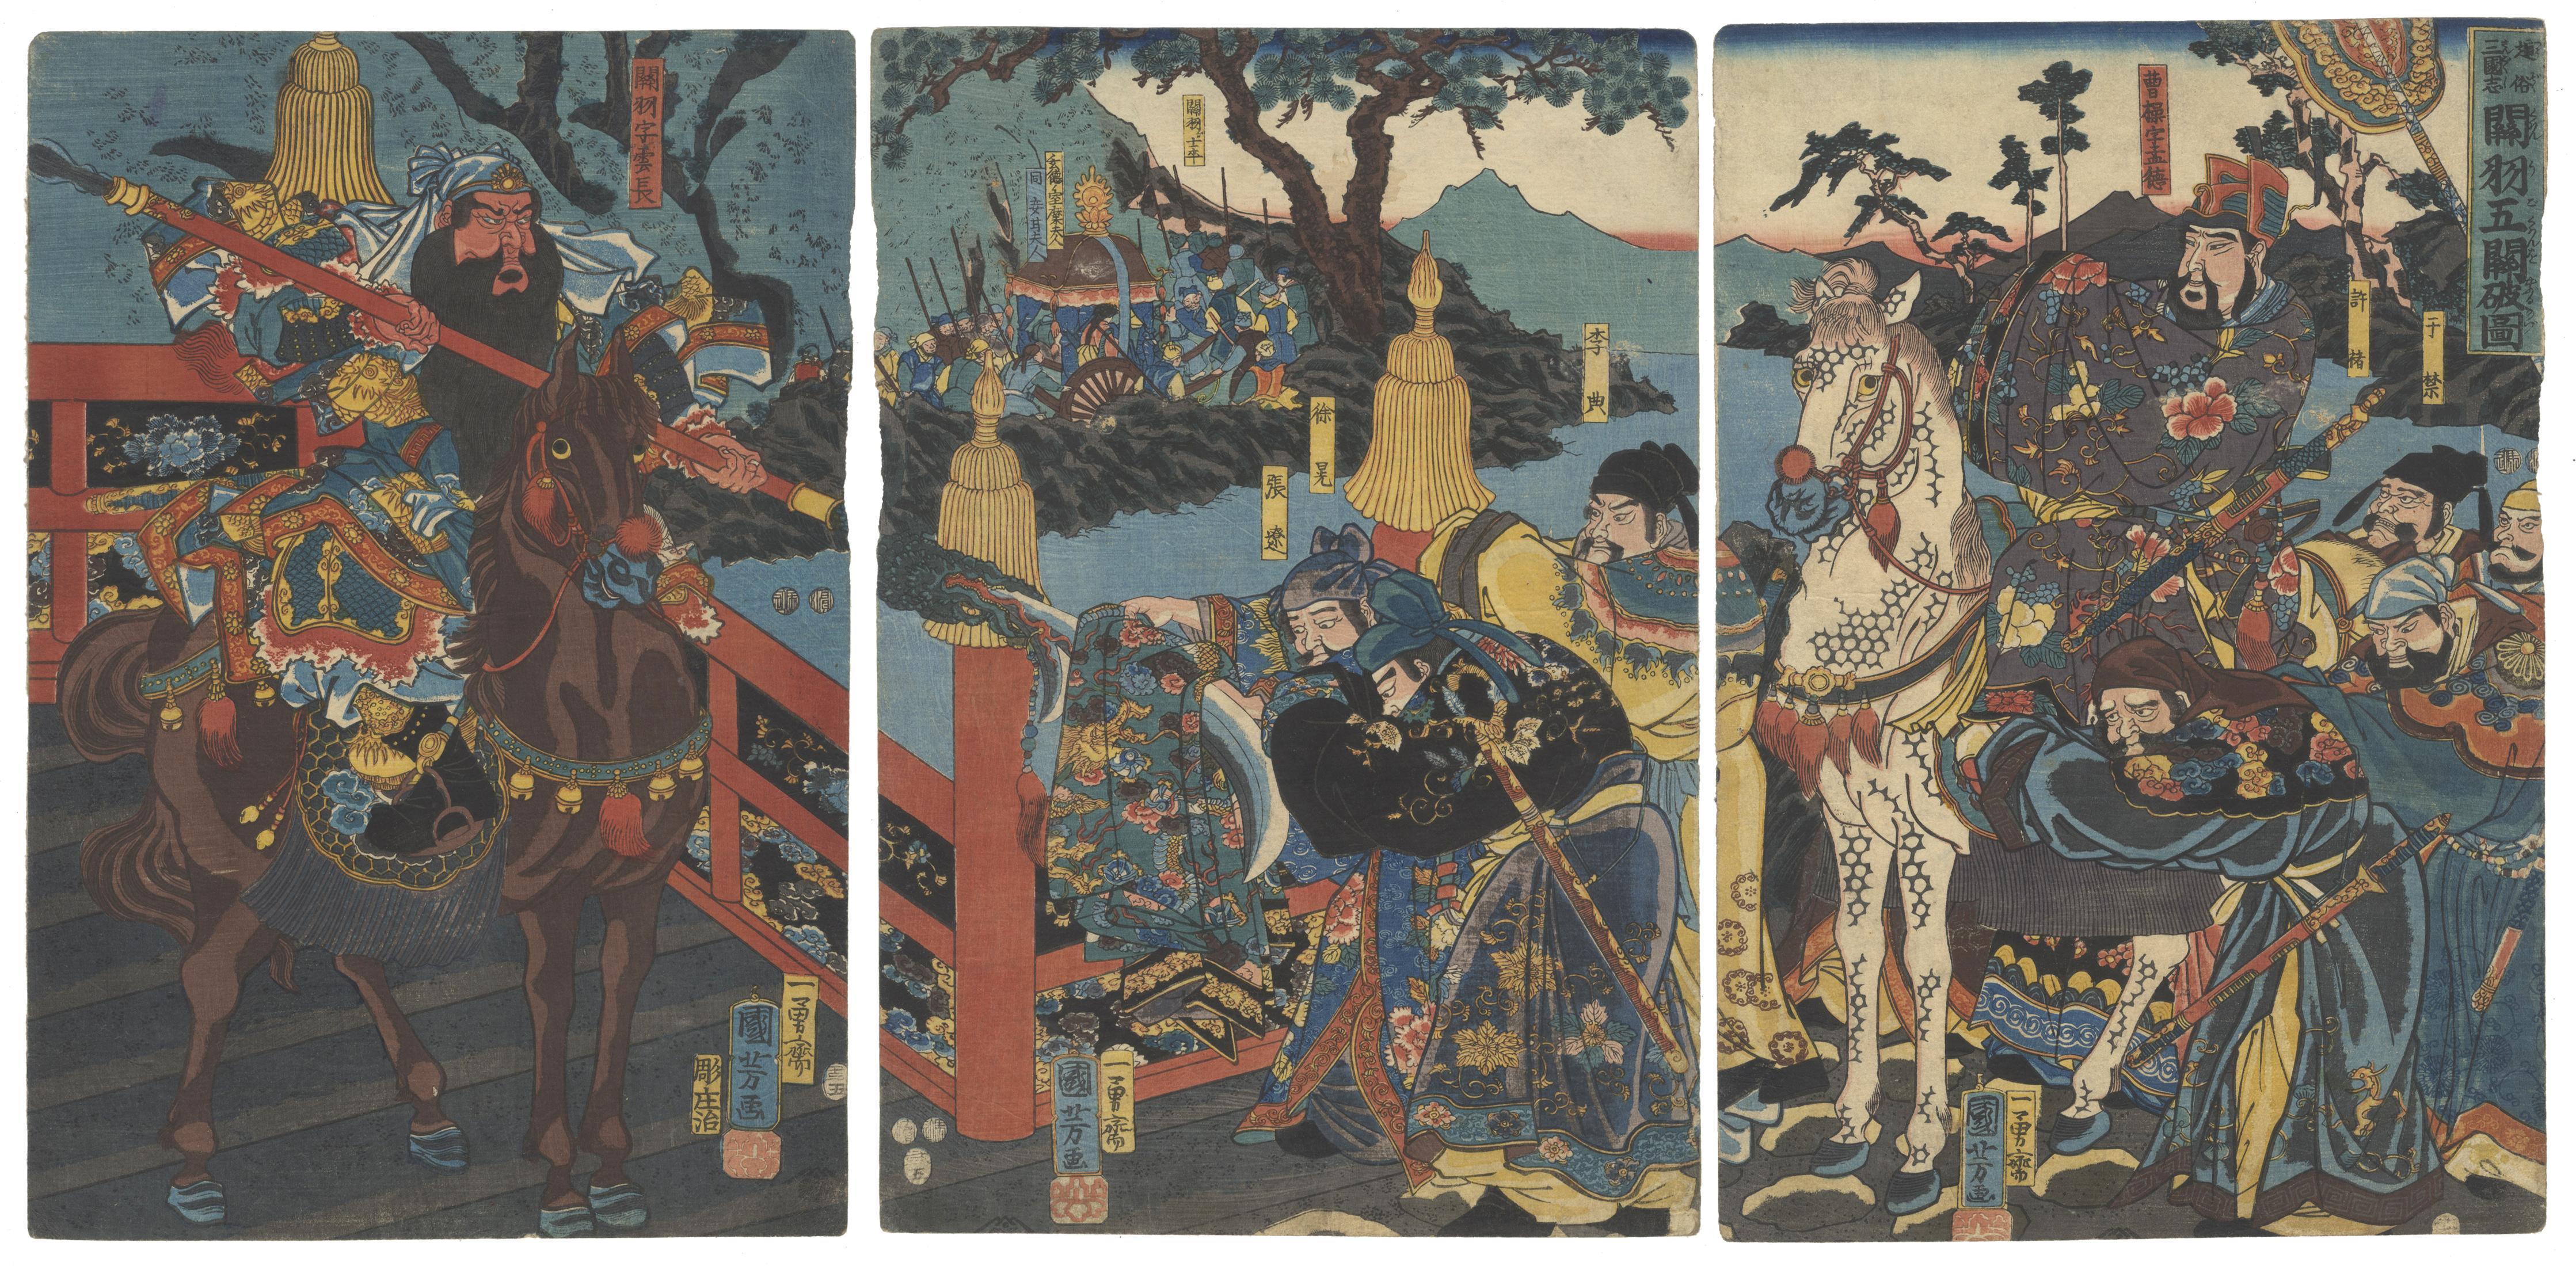 Artist: Kuniyoshi Utagawa (1798-1861)
Title: Guan Yu Passes Five Barriers
Series: The Popular Romance of the Three Kingdoms
Publisher: Tatsuya Kichizo
Date: 1853
Dimensions: (L) 24.4 x 35.7 (C) 24.4 x 35.8 (R) 24.4 x 35.7 

This popular episode from